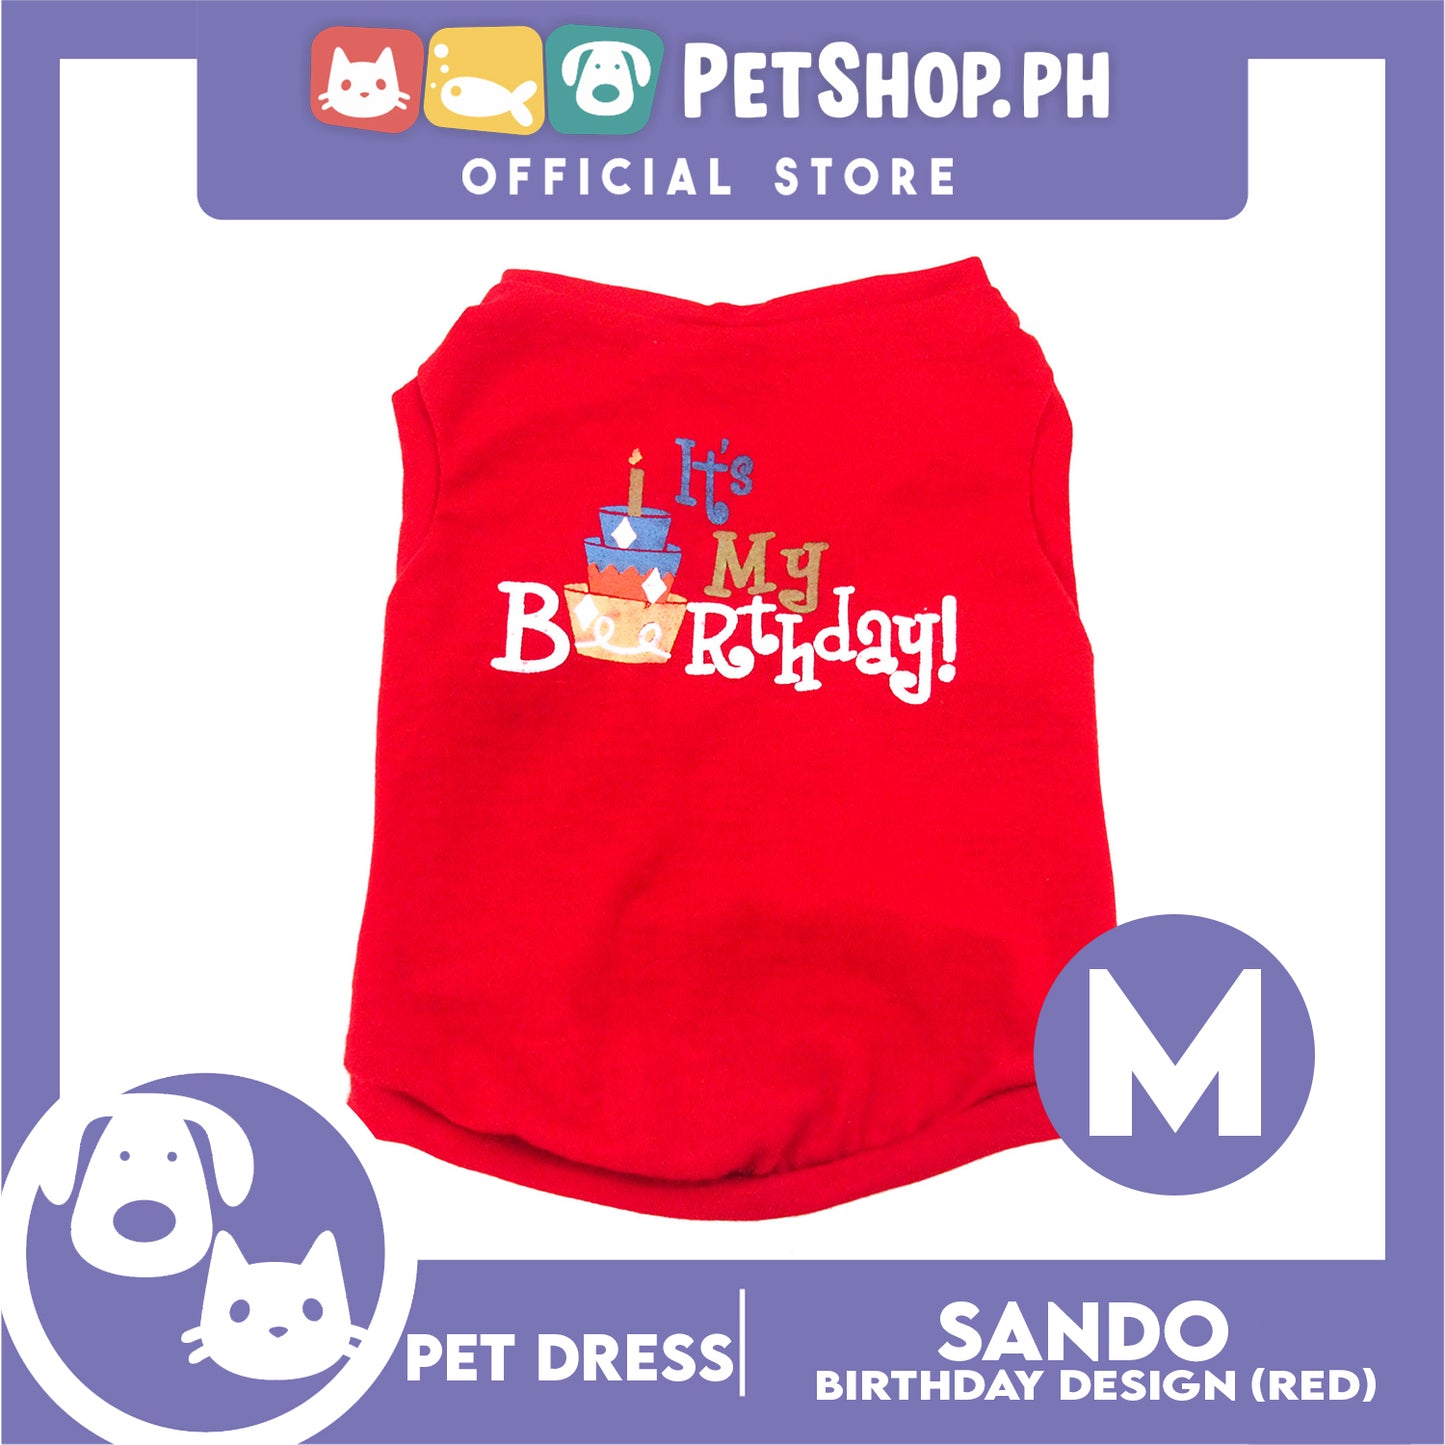 Pet Shirt Sleeveless (Medium) with It's My Birthday at Back for Puppy, Small Dog, & Cat- Sando Breathable Clothes, Pet T-shirt, Dog Sando